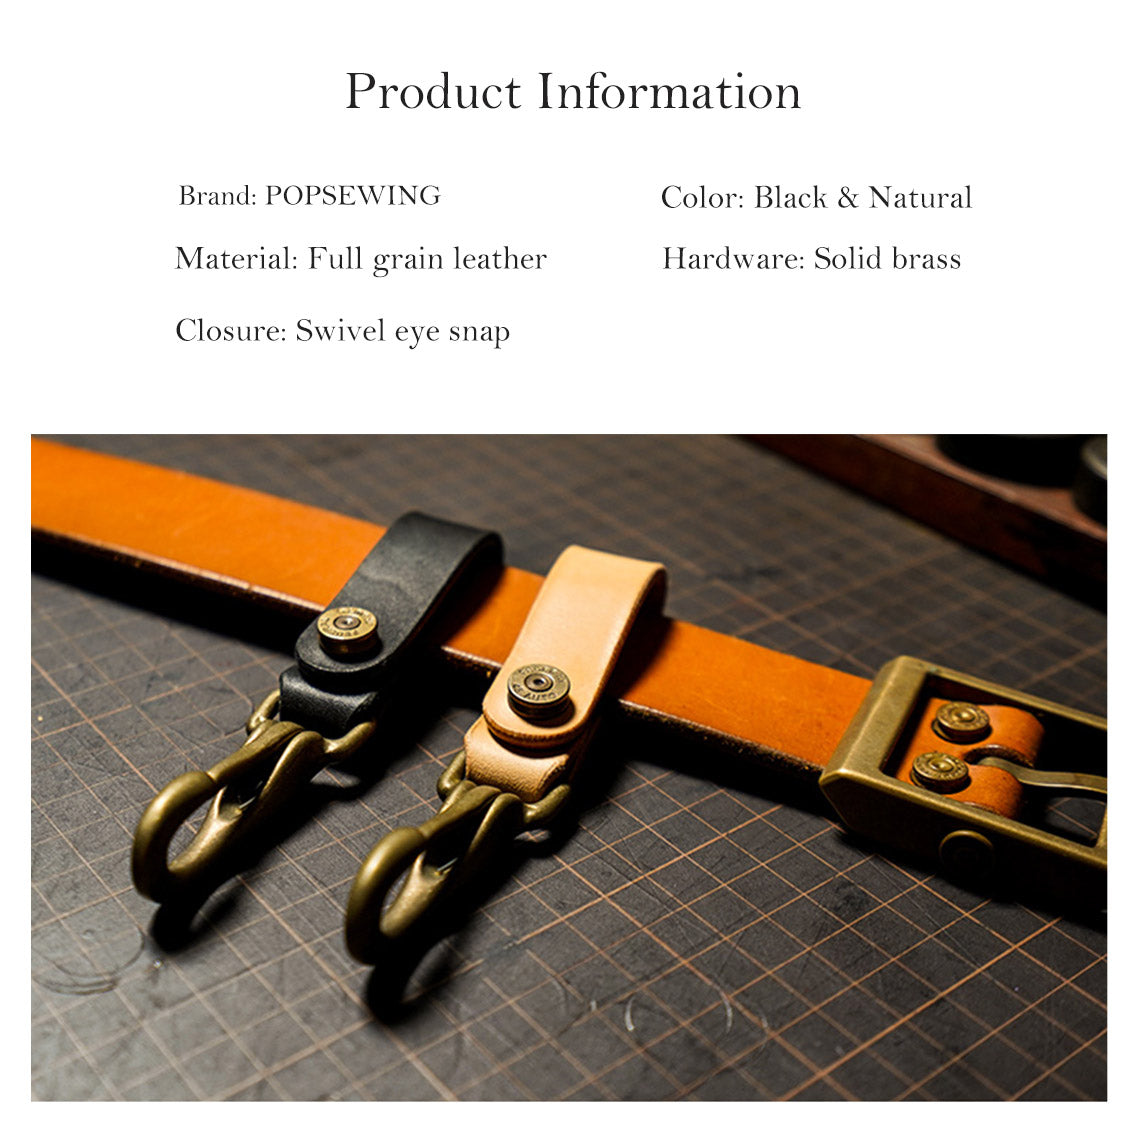 Handmade Belt Loop Keychain | Leather Key Clip